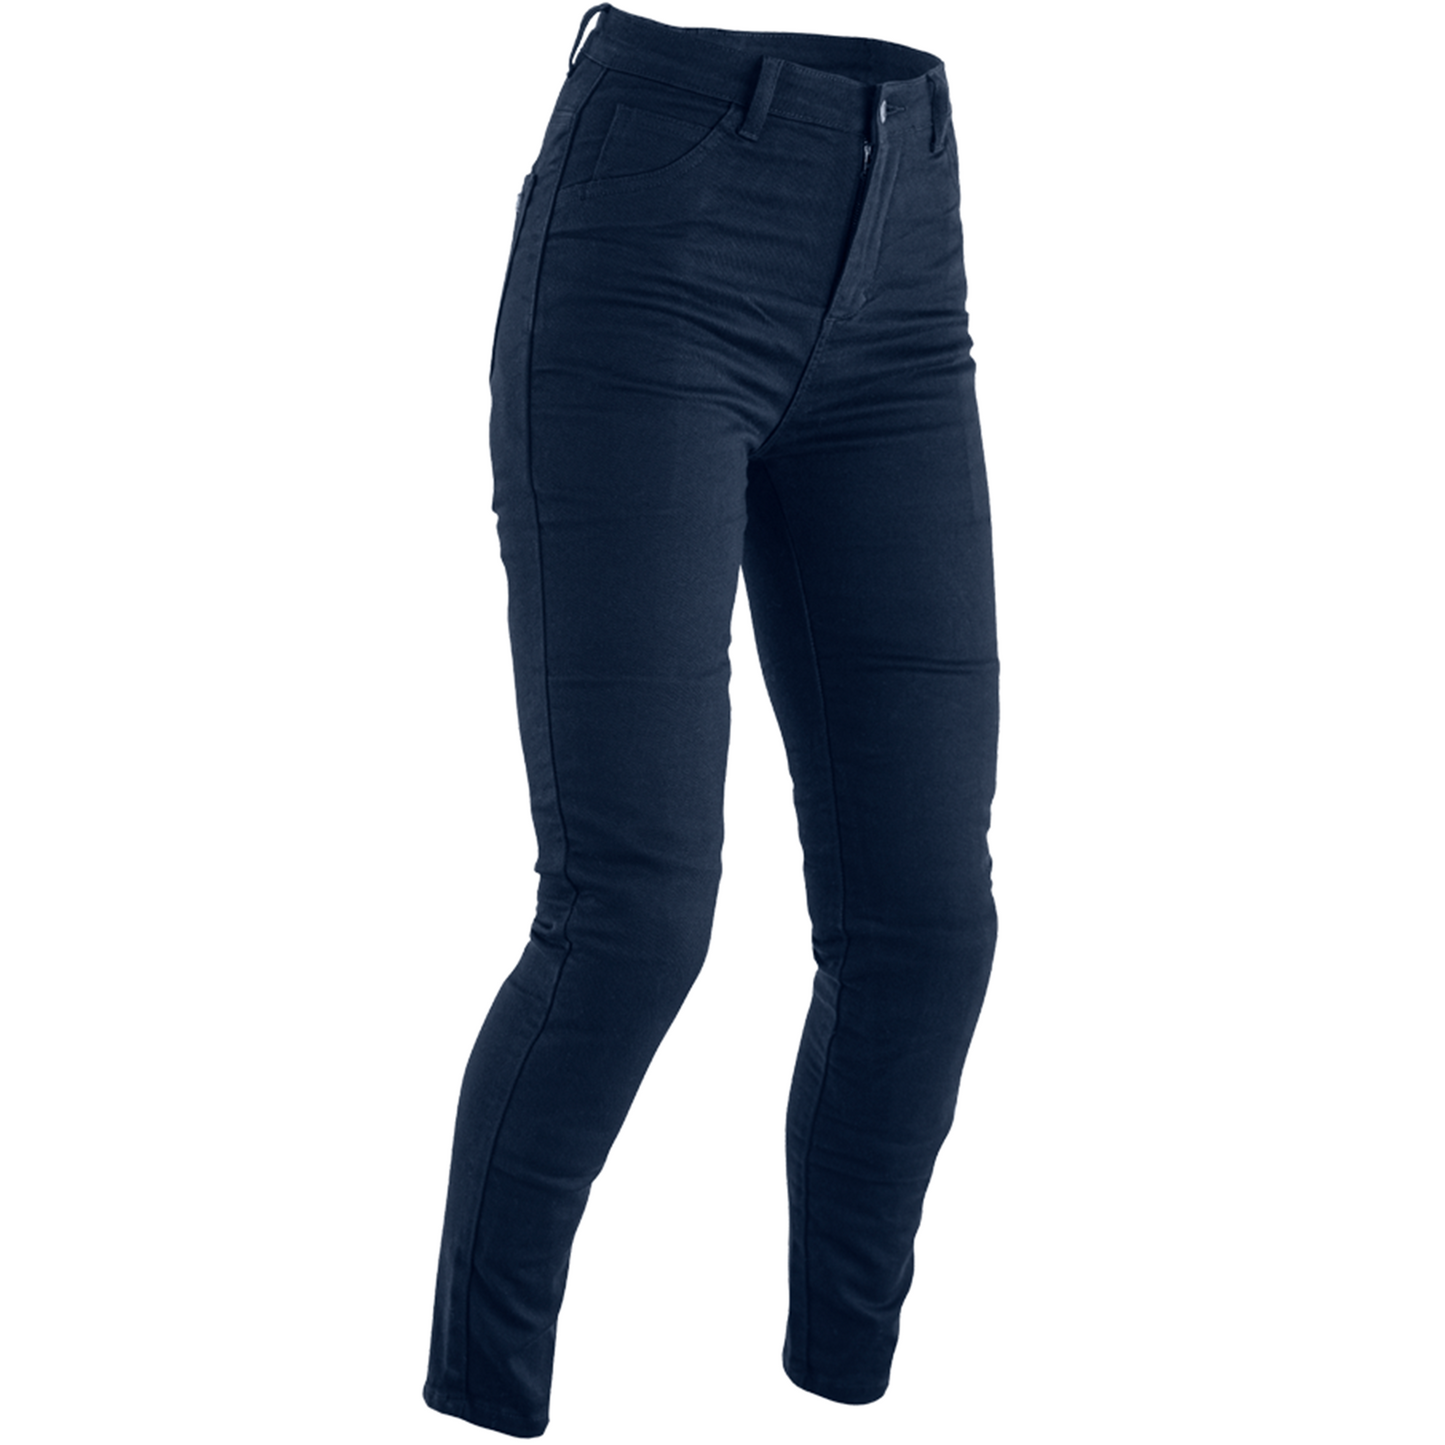 RST Reinforced Jegging CE Ladies Textile Jeans - Indigo Blue Denim